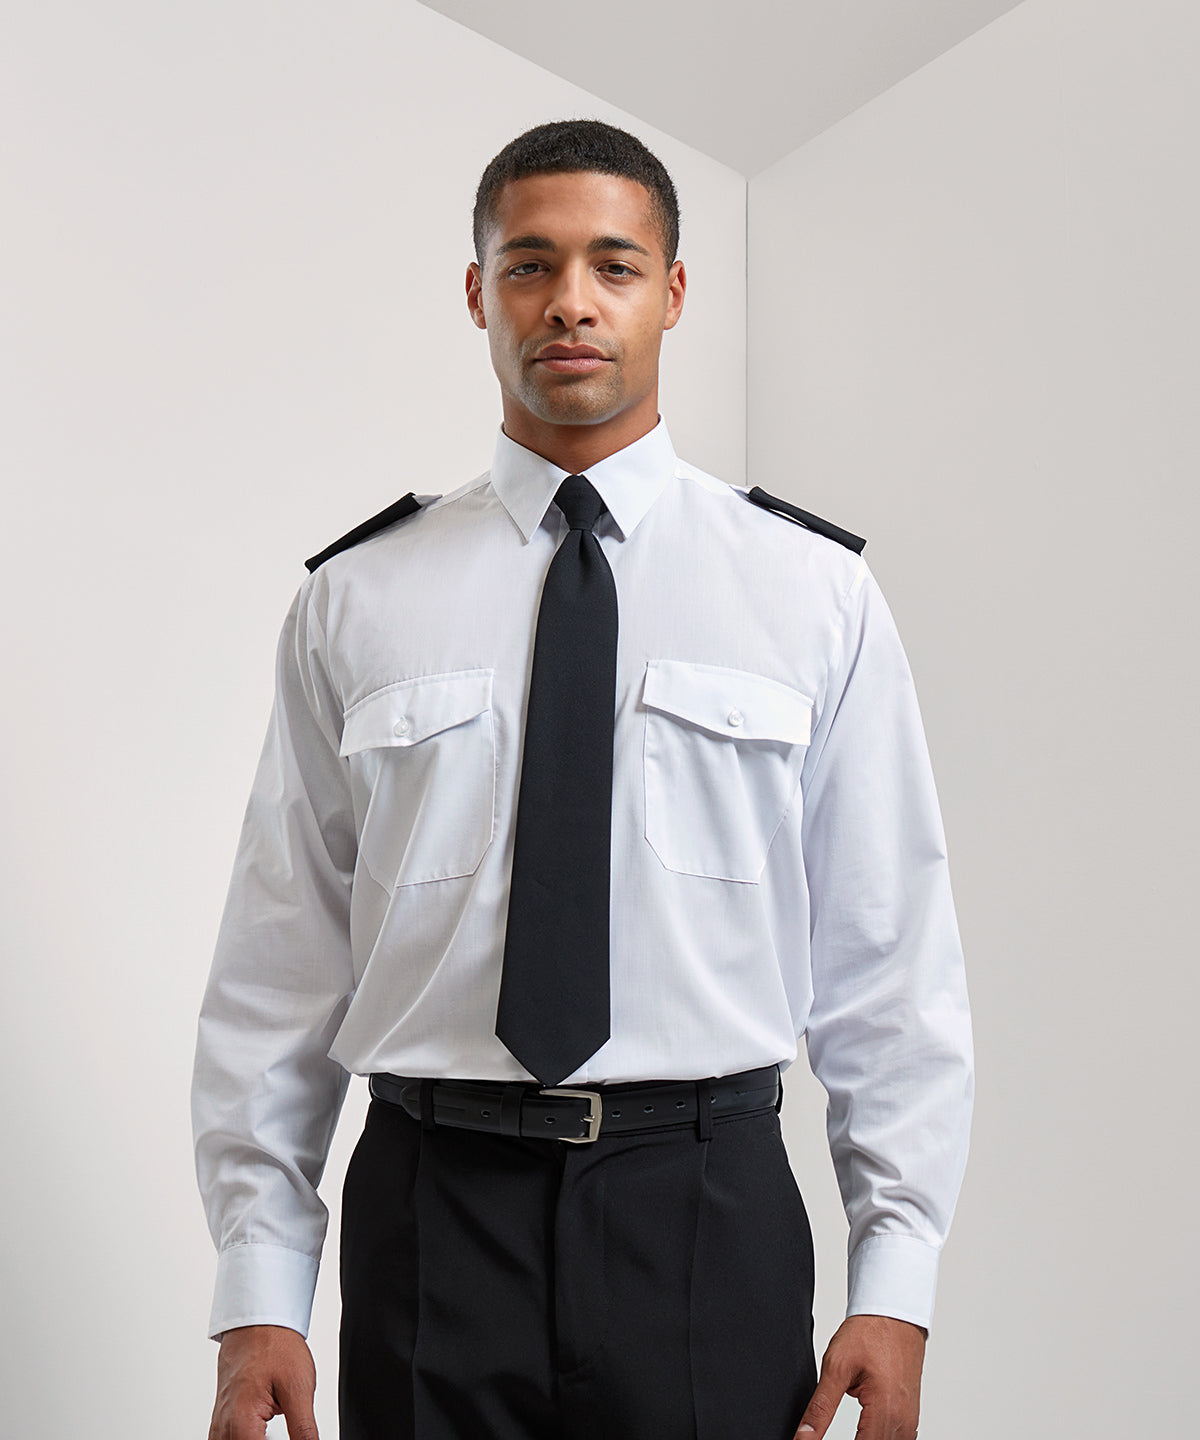 Bolir - Long Sleeve Pilot Shirt